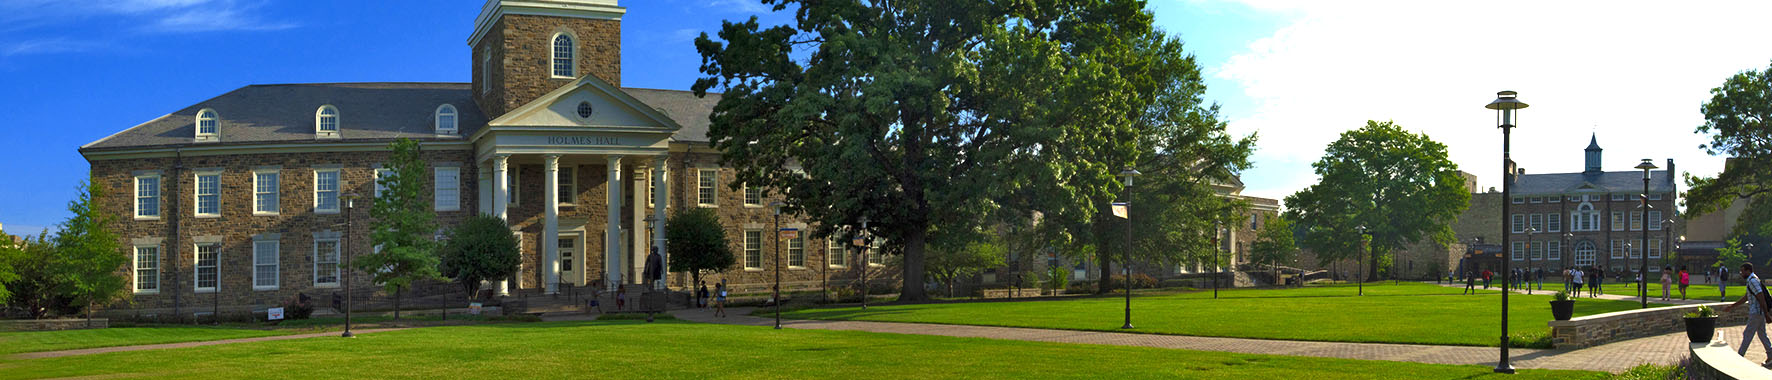 Morgan State University - Holmes Hall